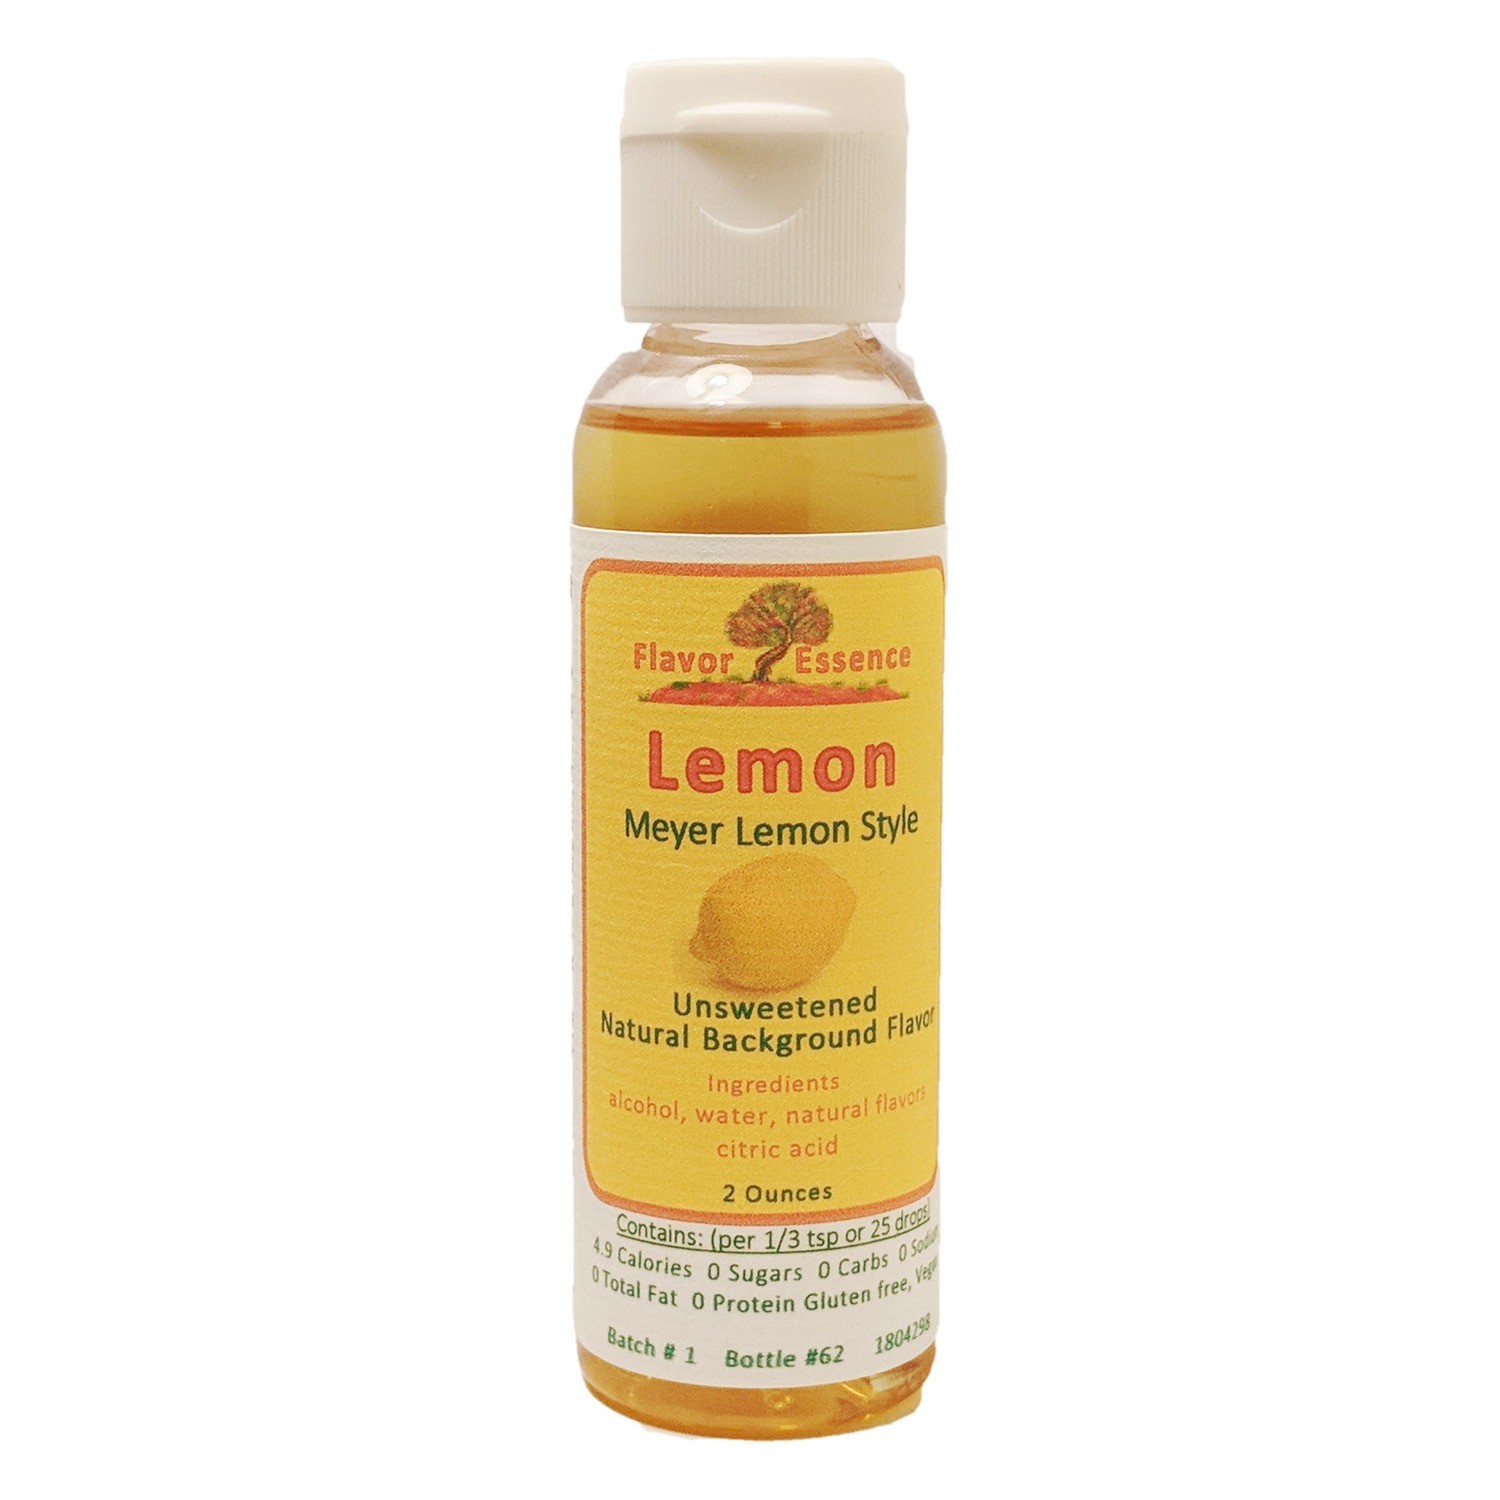 Flavor Essence Lemon (Meyer Lemon Style) 2oz - Natural Unsweetened Background Flavoring